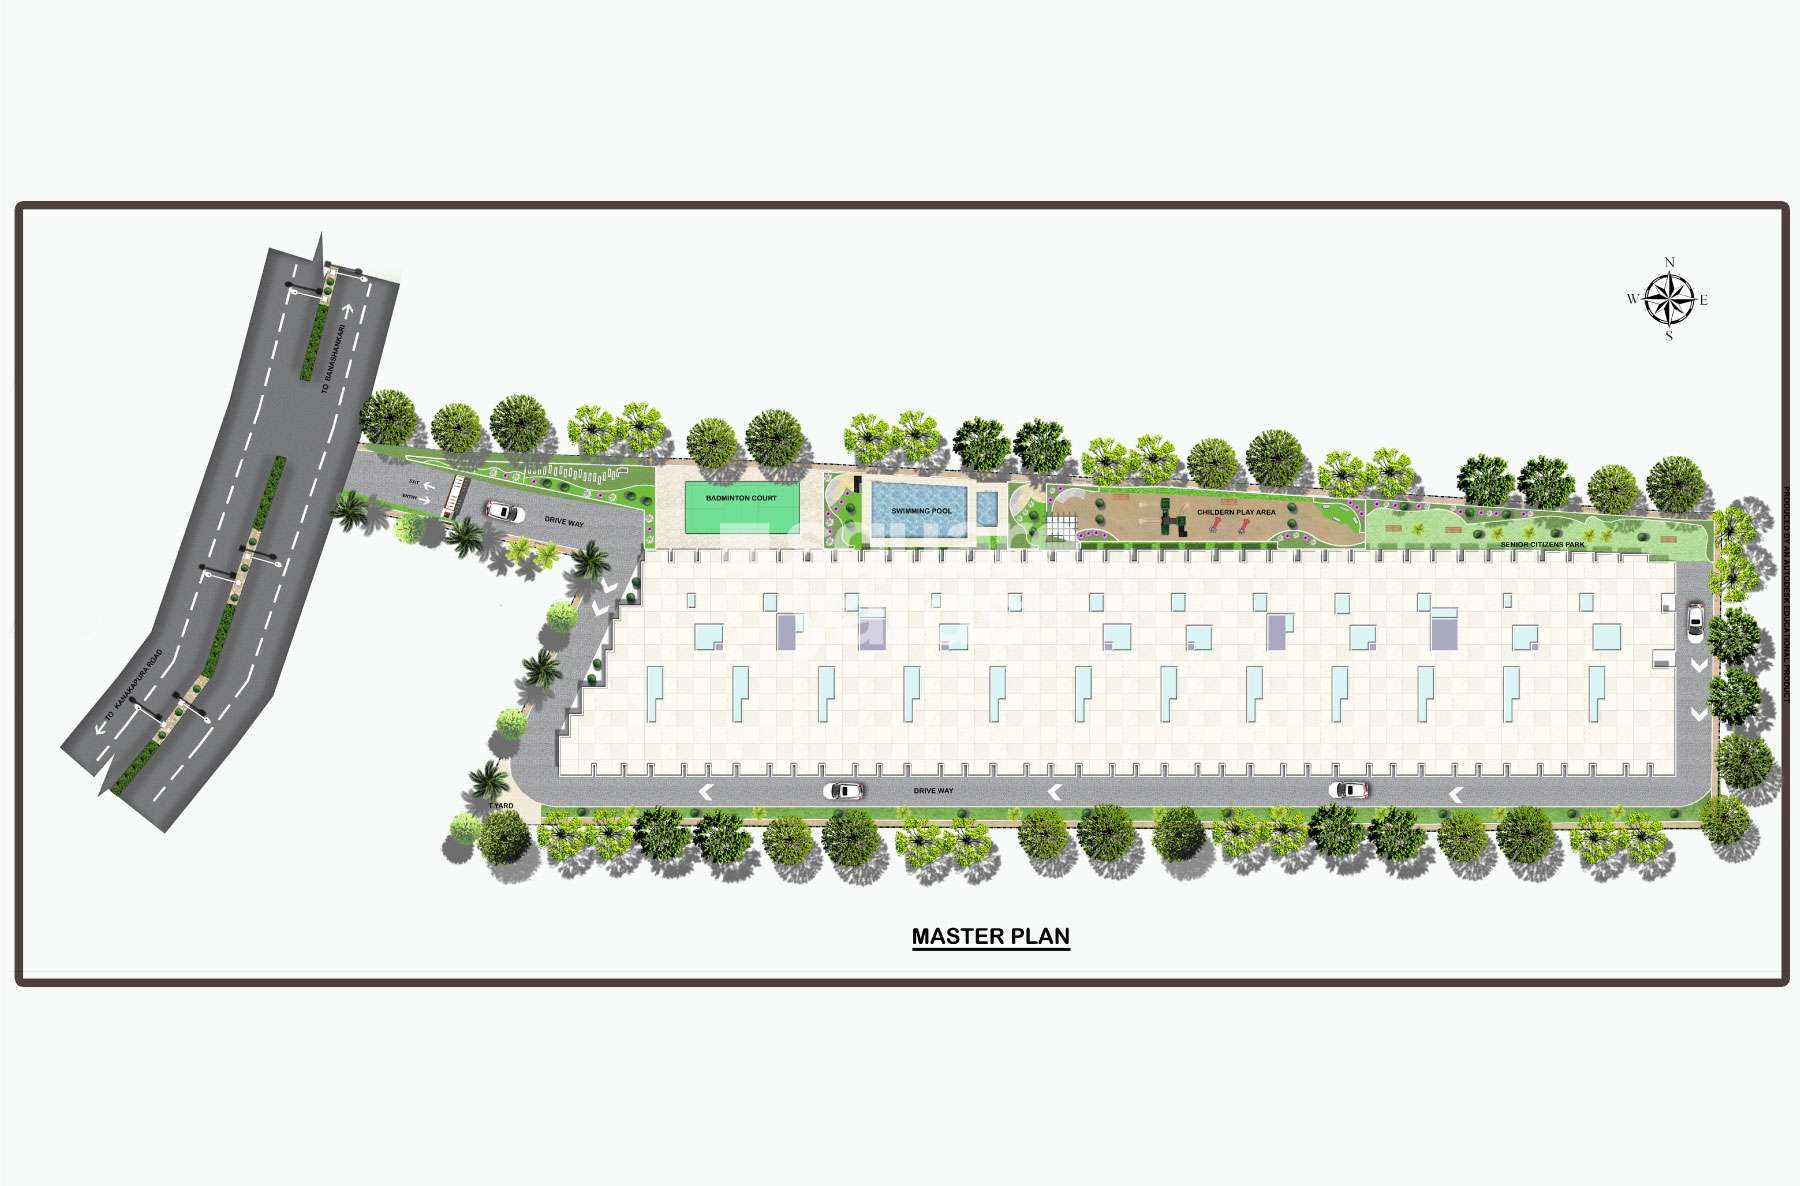 mahaveer carnation project master plan image1